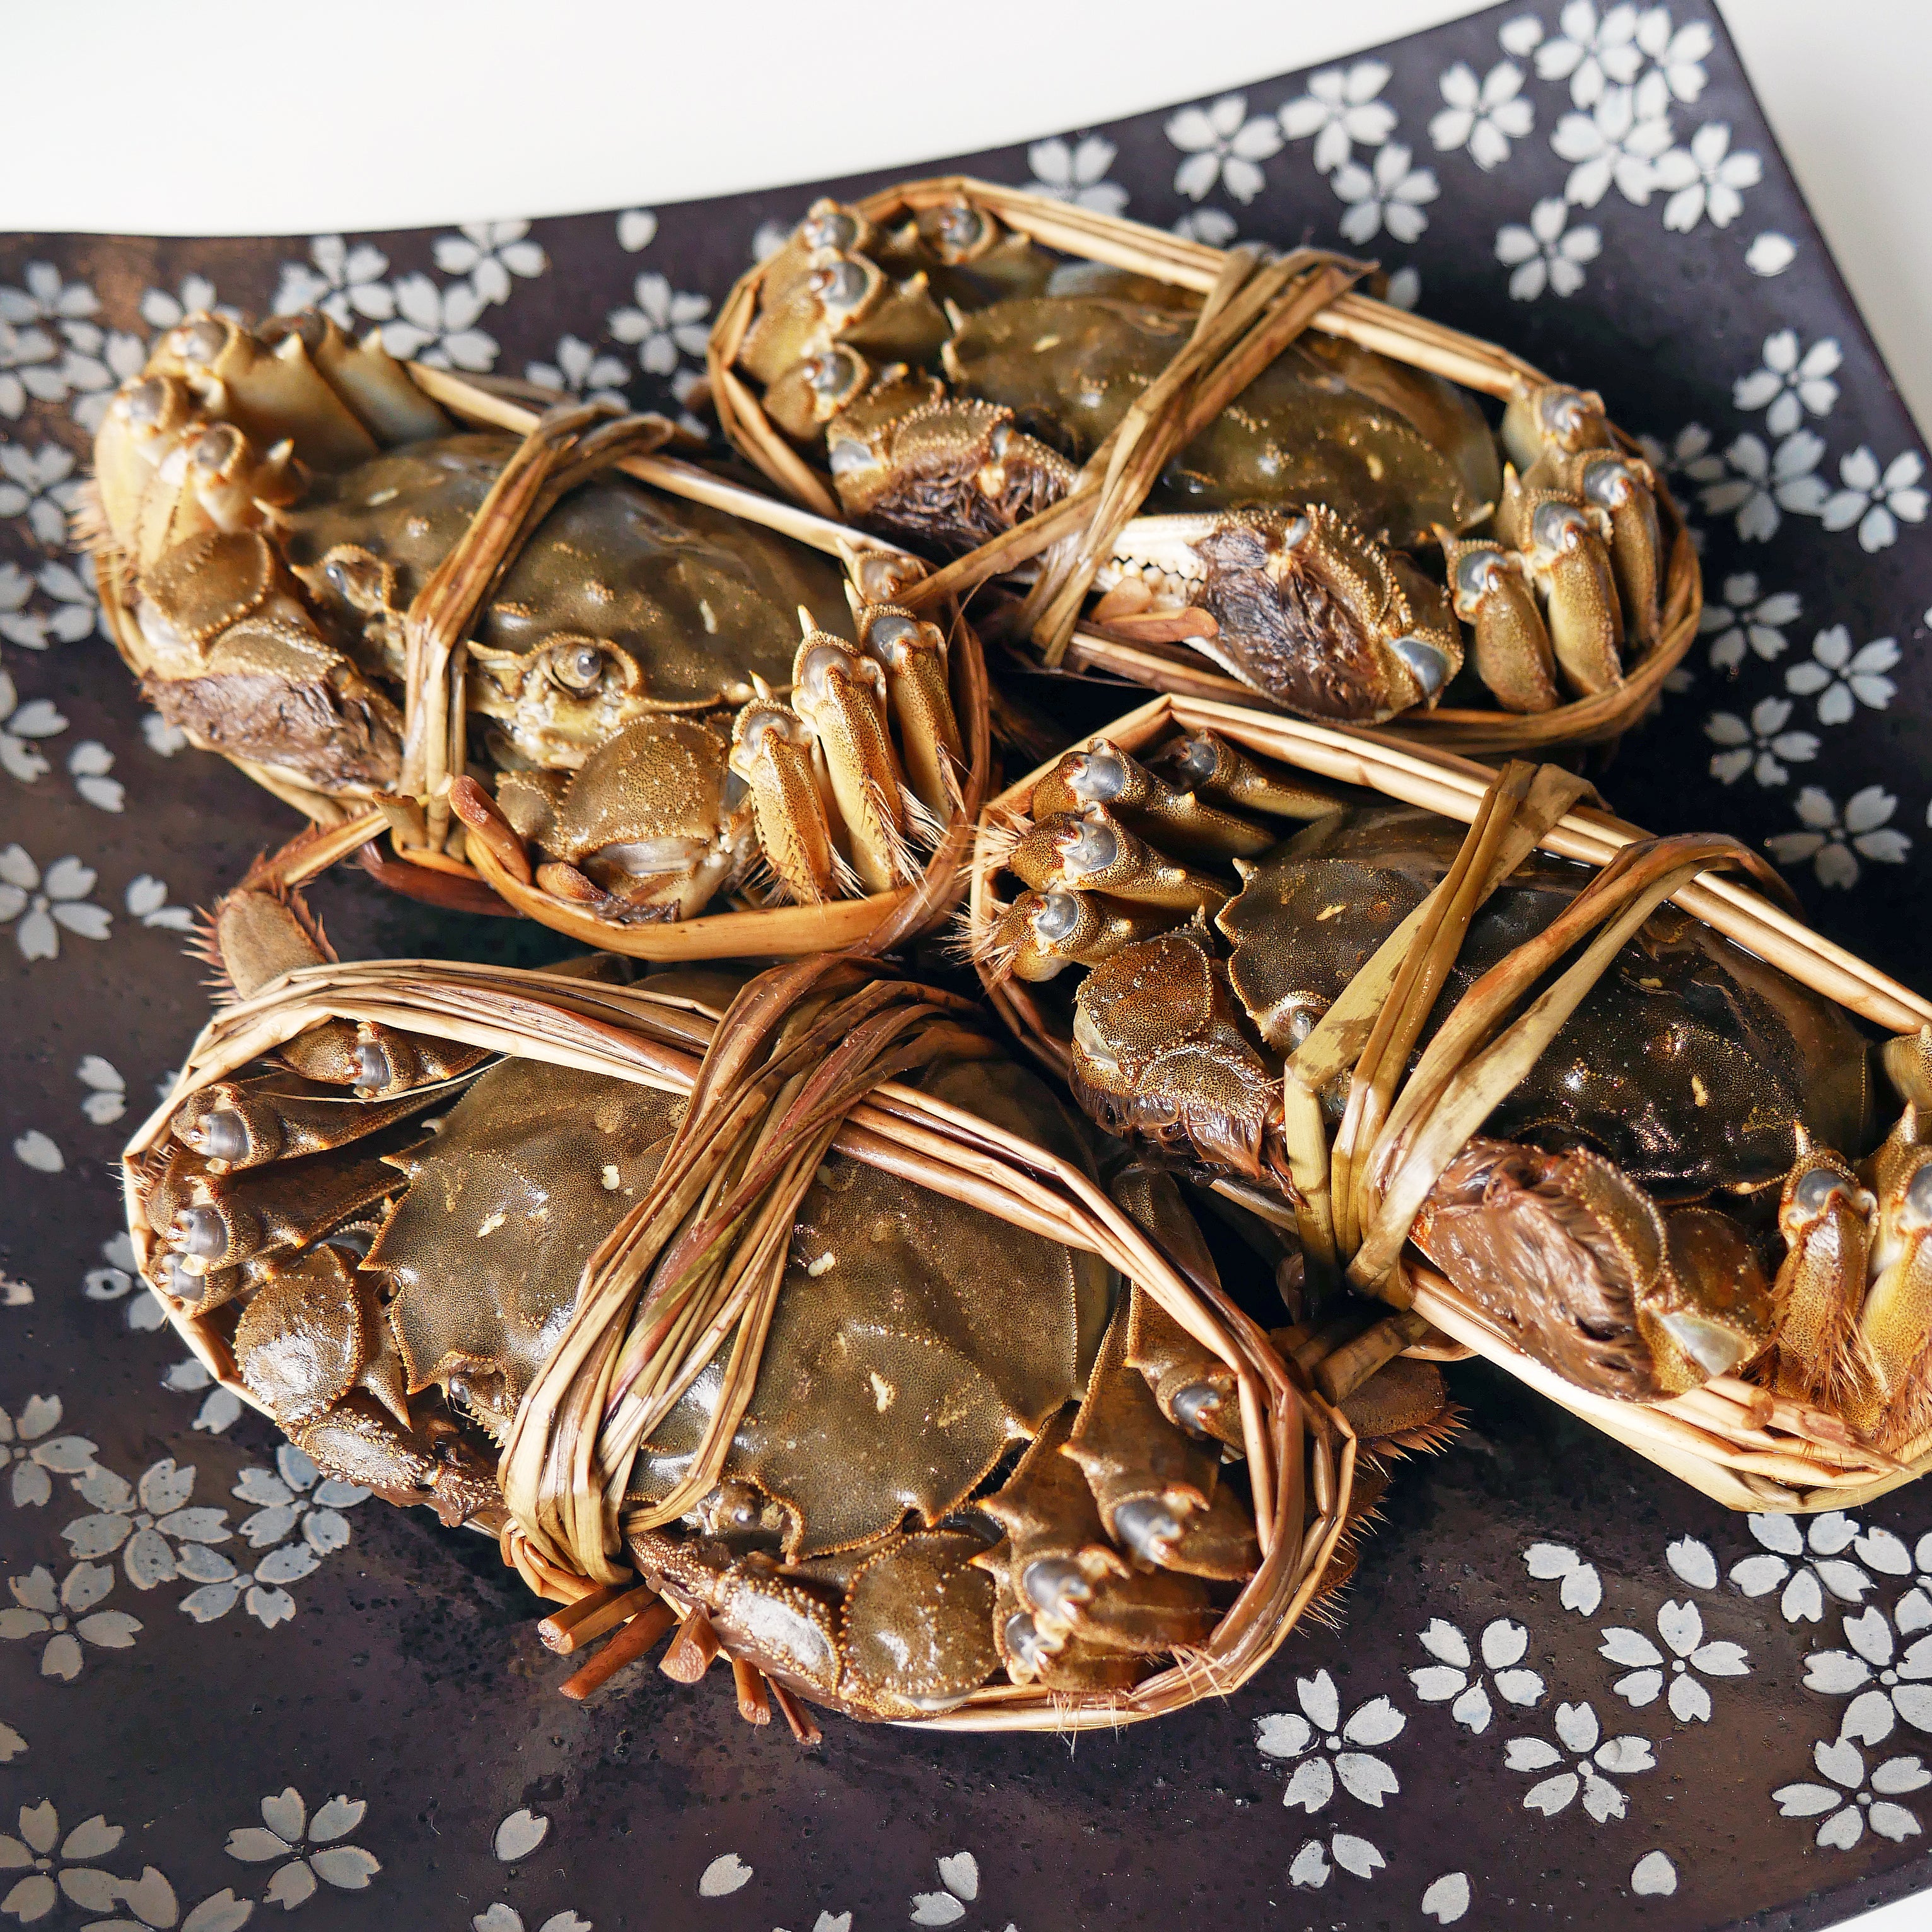 Bundle of 6 陽澄湖 Hairy Crab